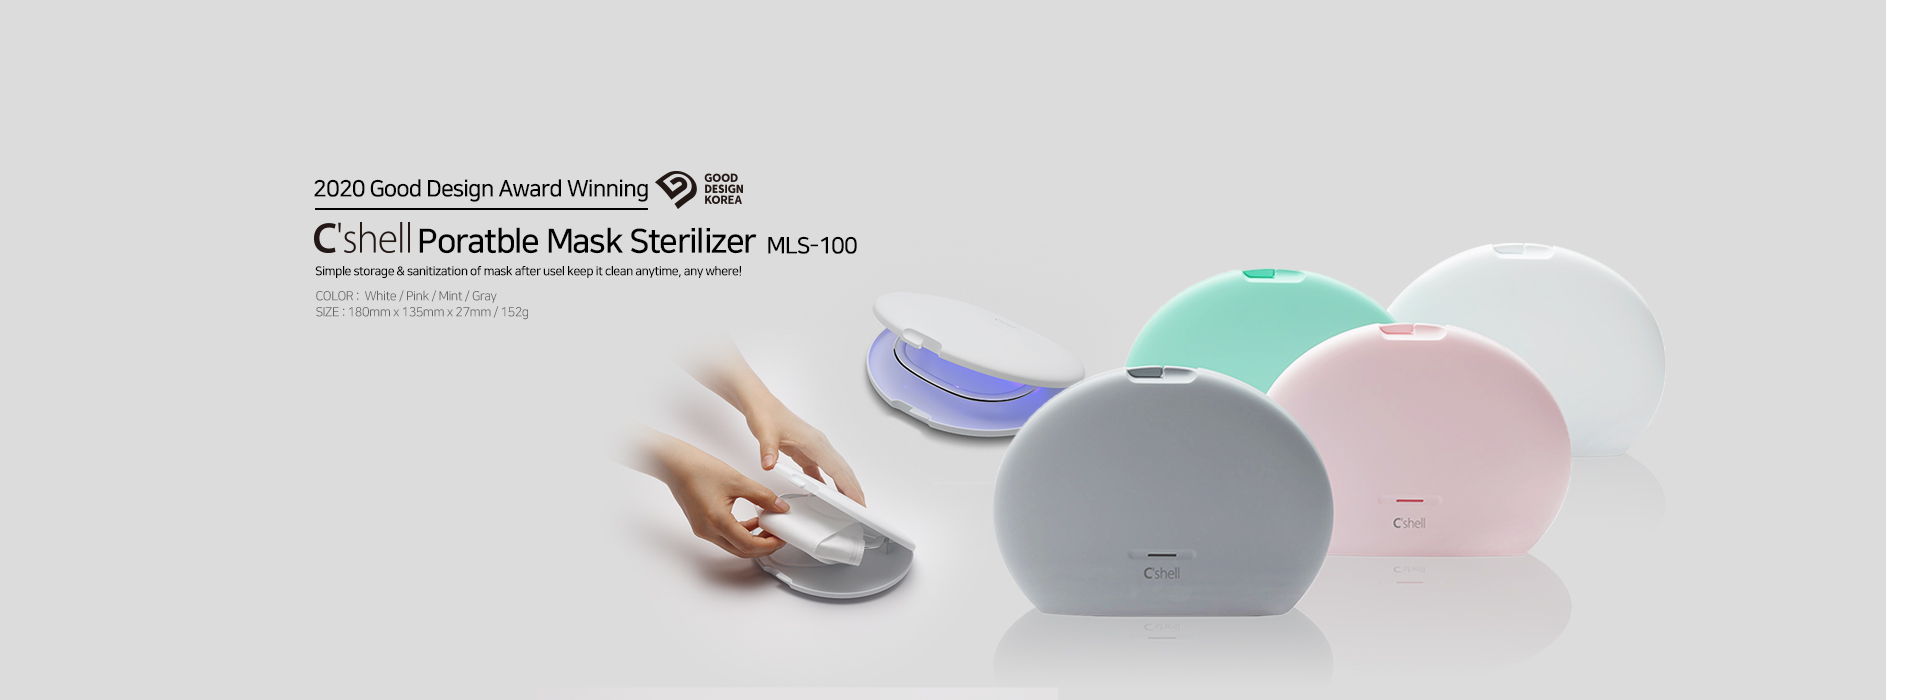 MLS-100: Portable Mask Sterilizer